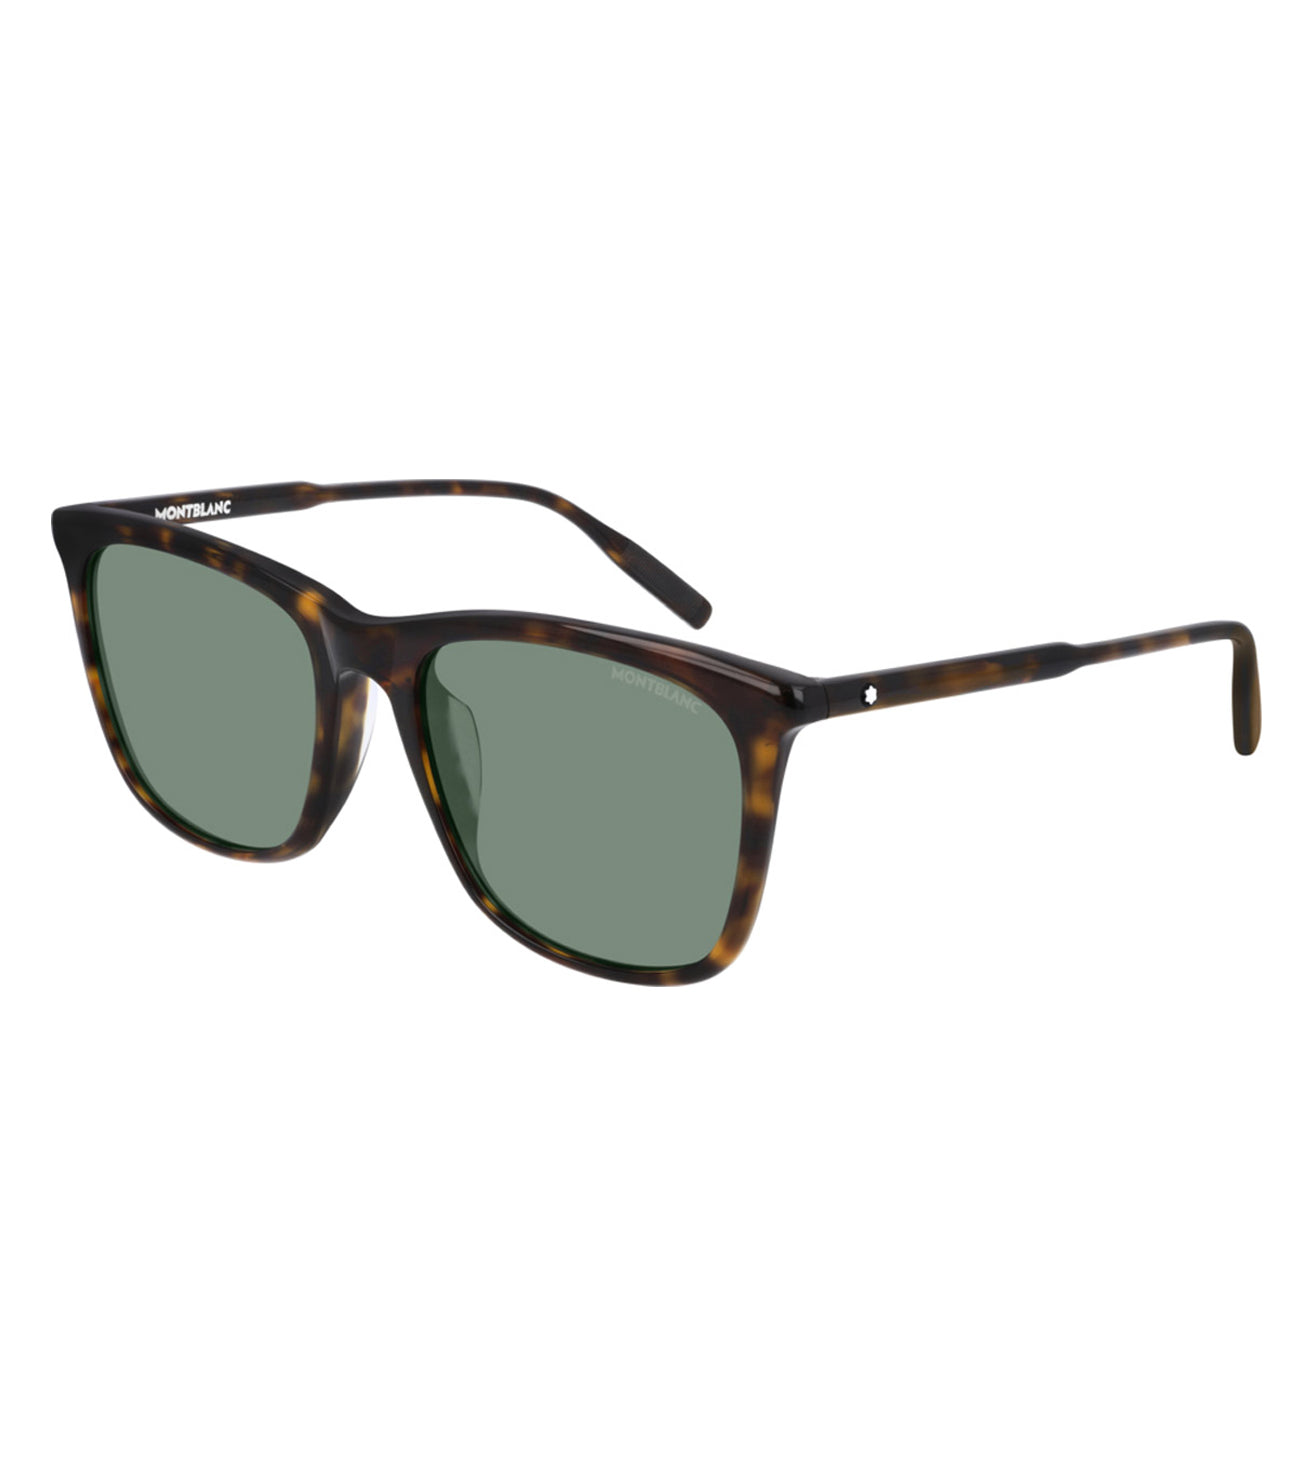 Montblanc Men's Green Square Sunglasses